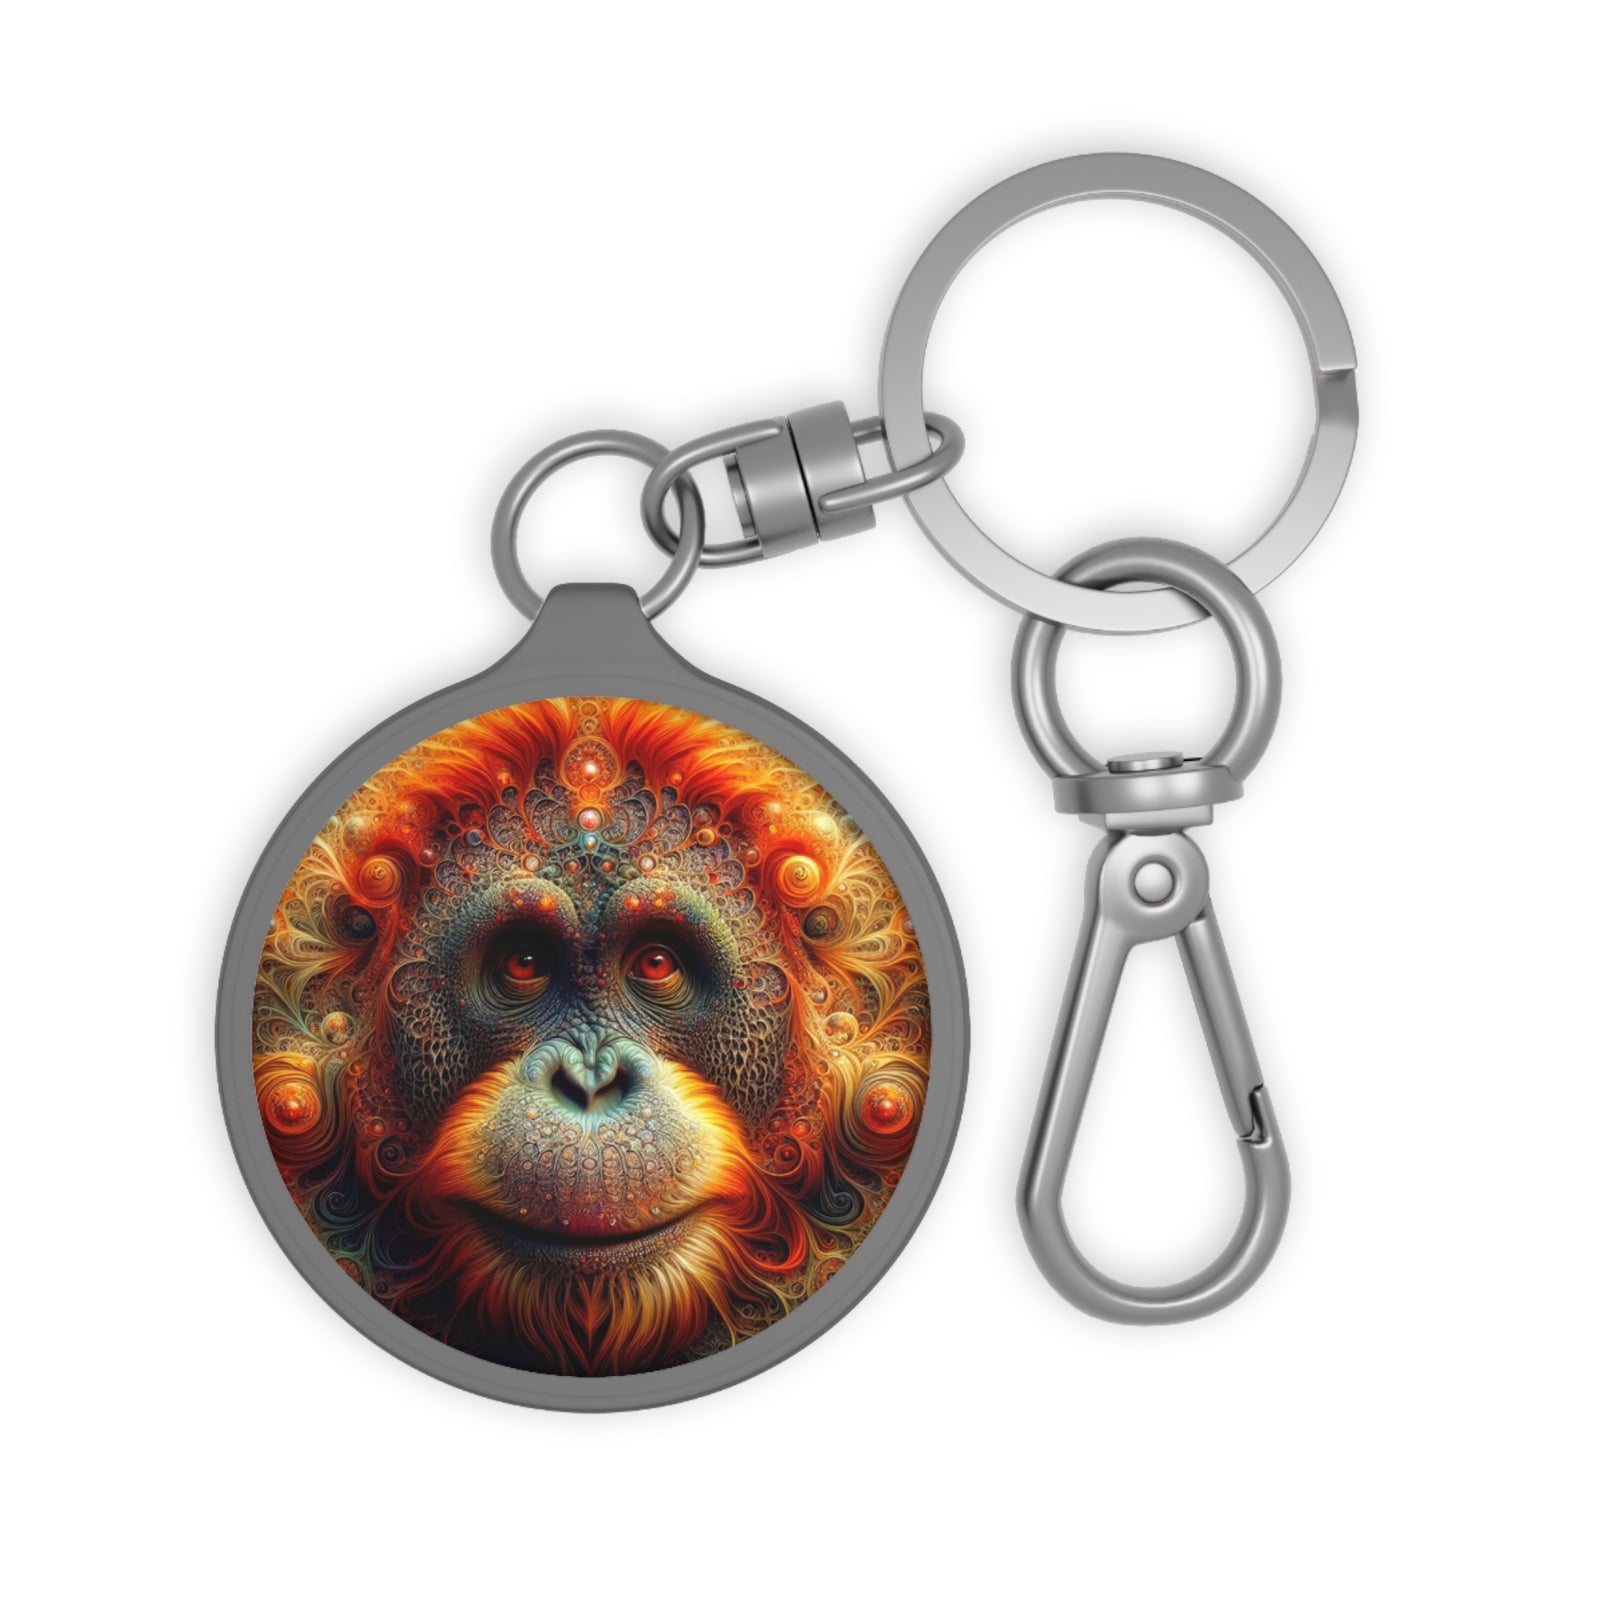 The Fractal Orangutan Keyring Tag